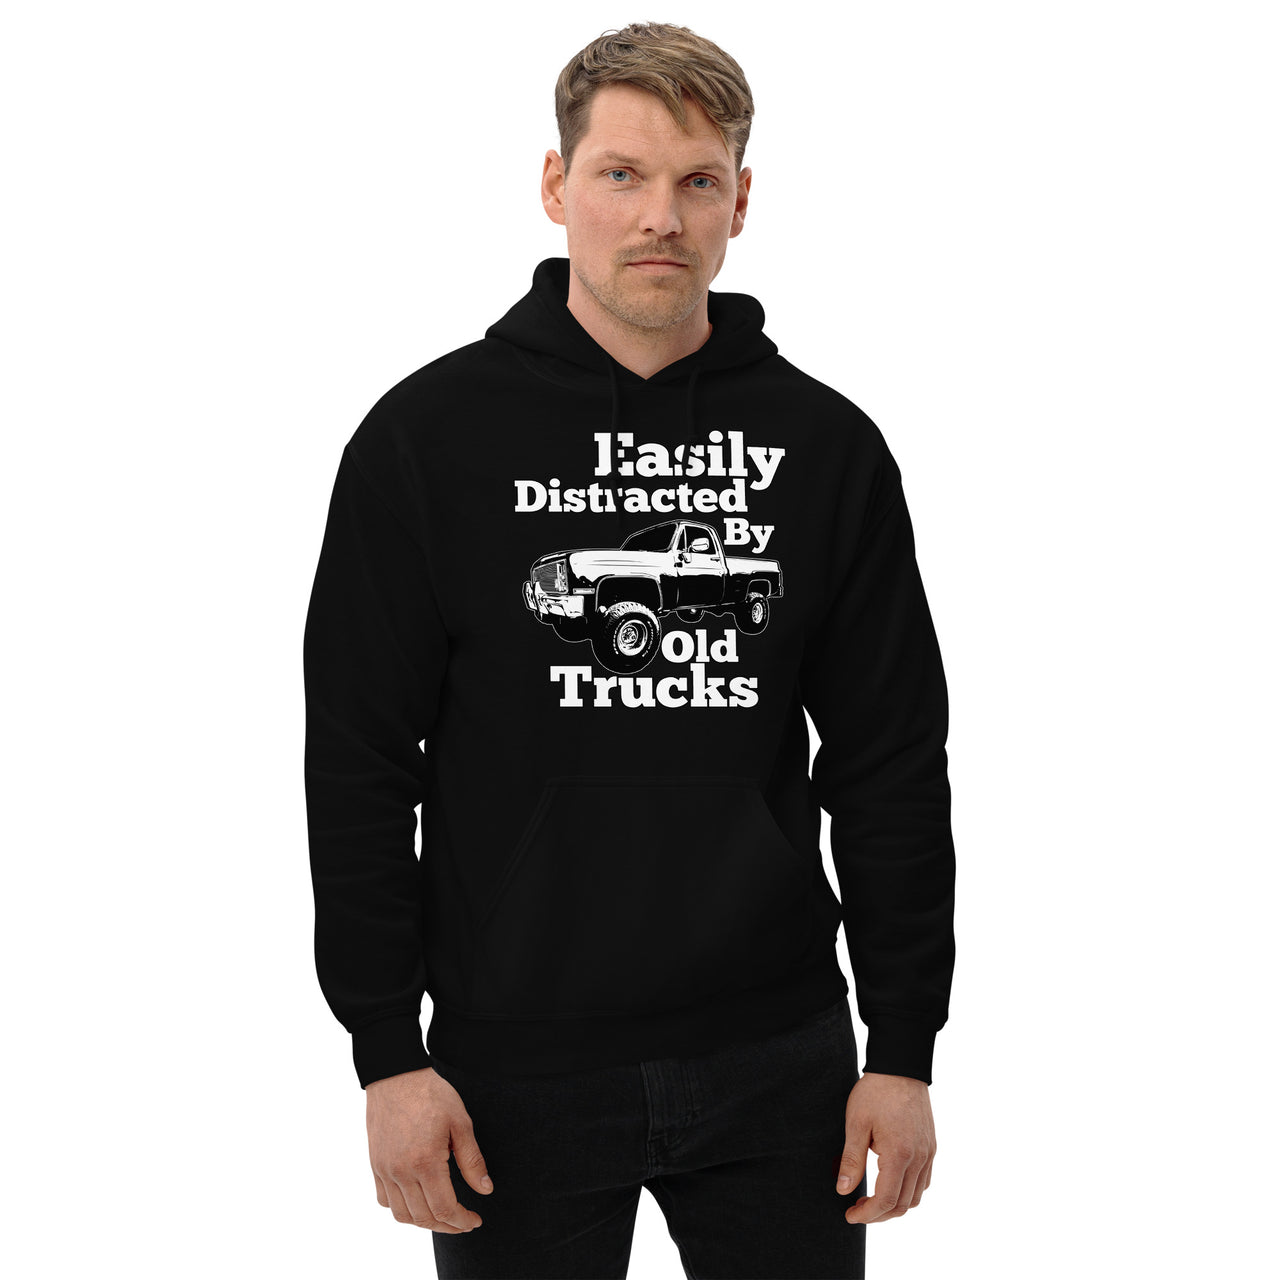 man modeling Square Body Truck Hoodie Sweatshirt - Easily Distracted By Old Trucks